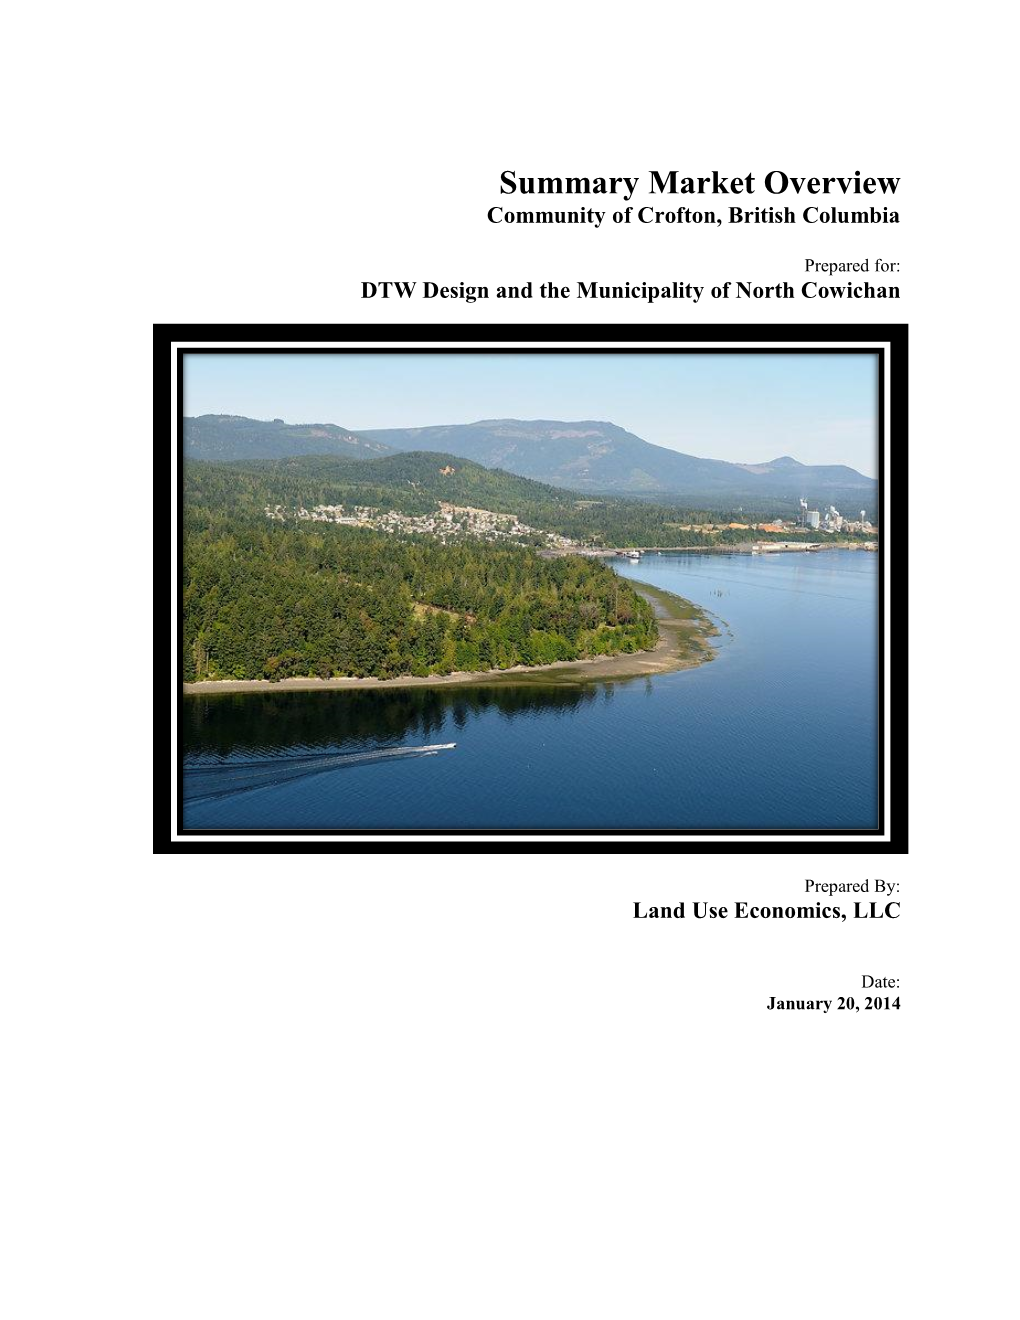 Summary Market Overview Community of Crofton, British Columbia